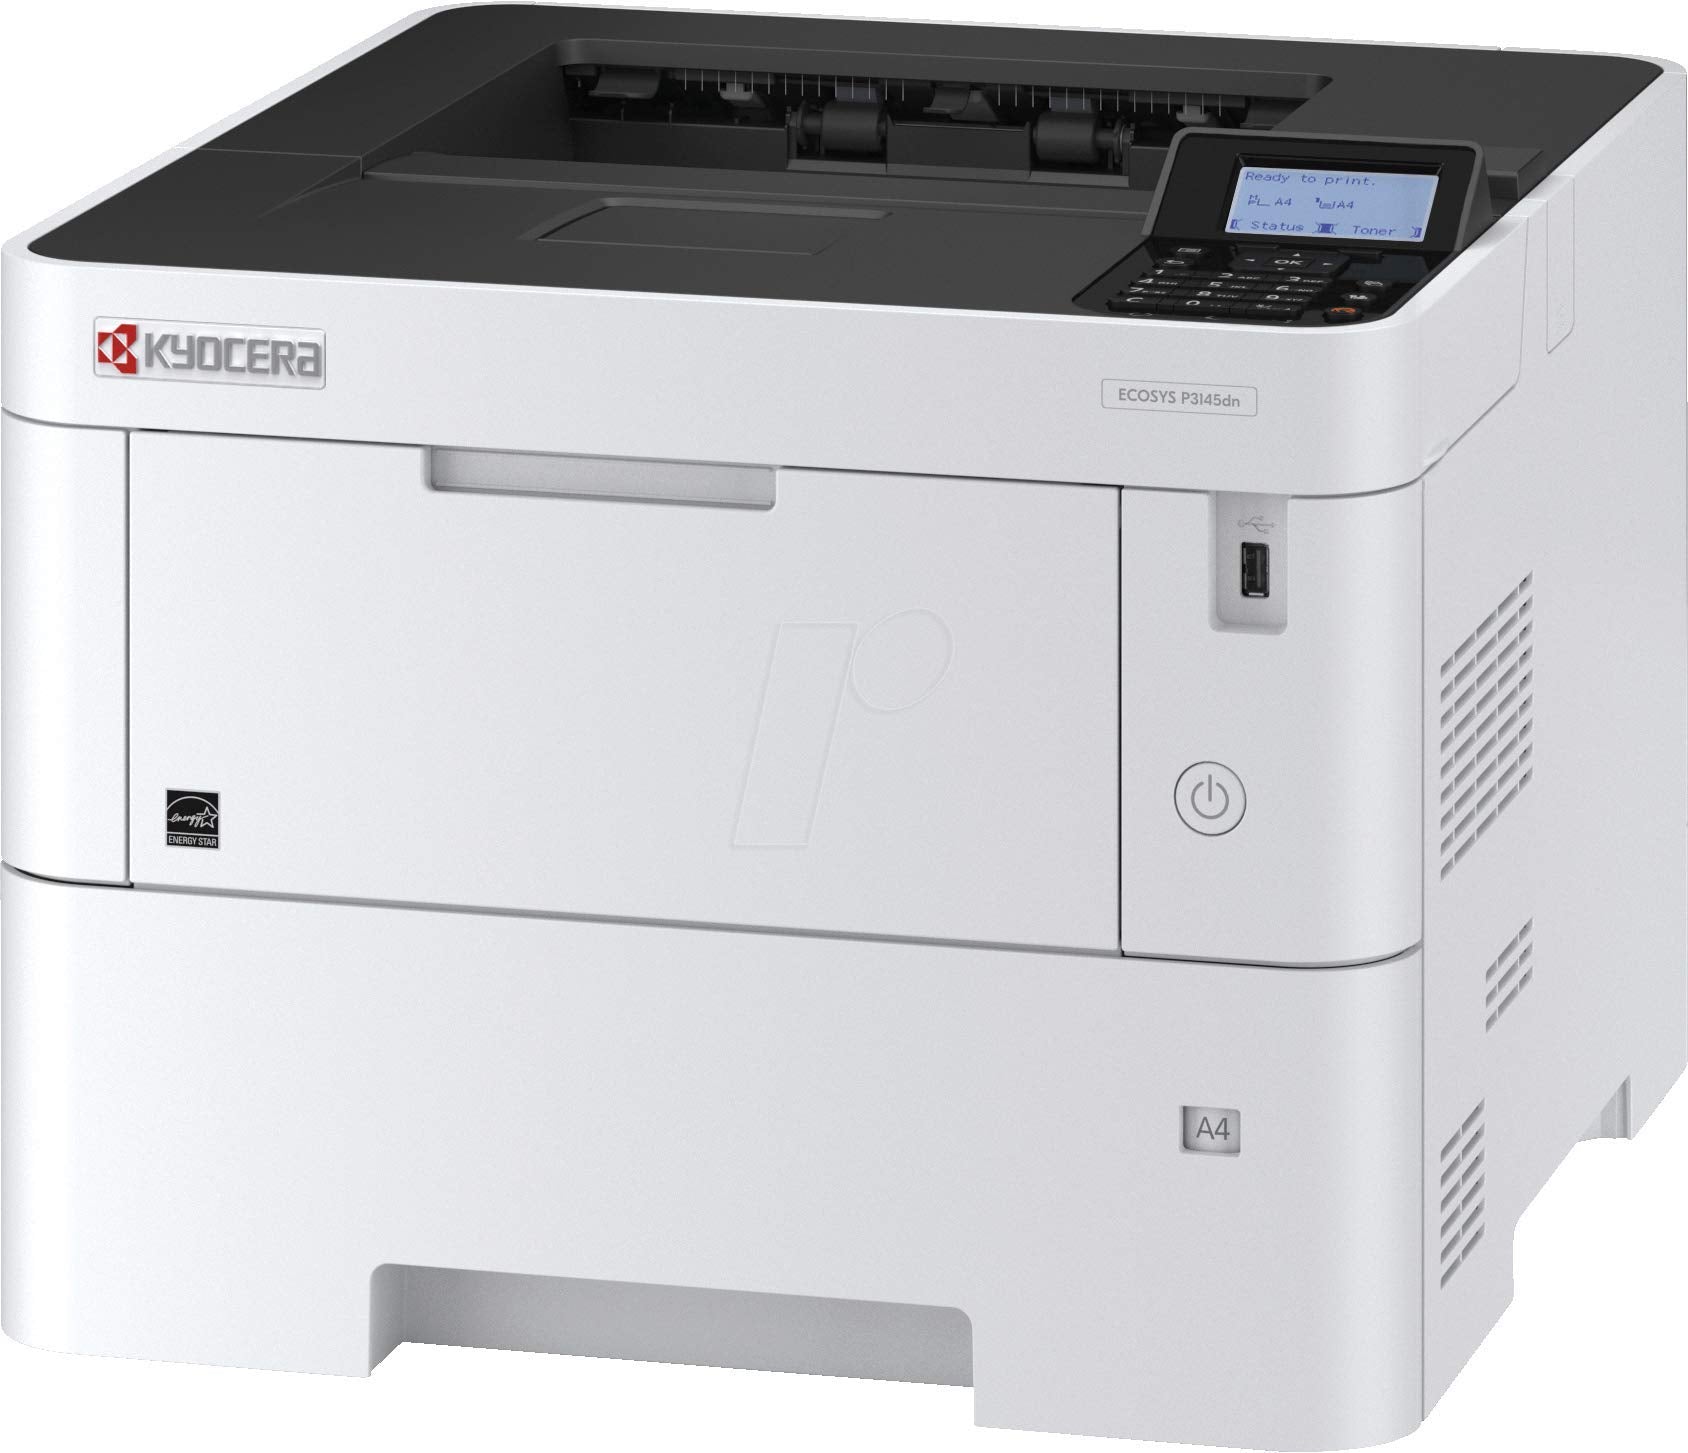 Kyocera P3145dn Mono Laser Printer - The Printer Clinic